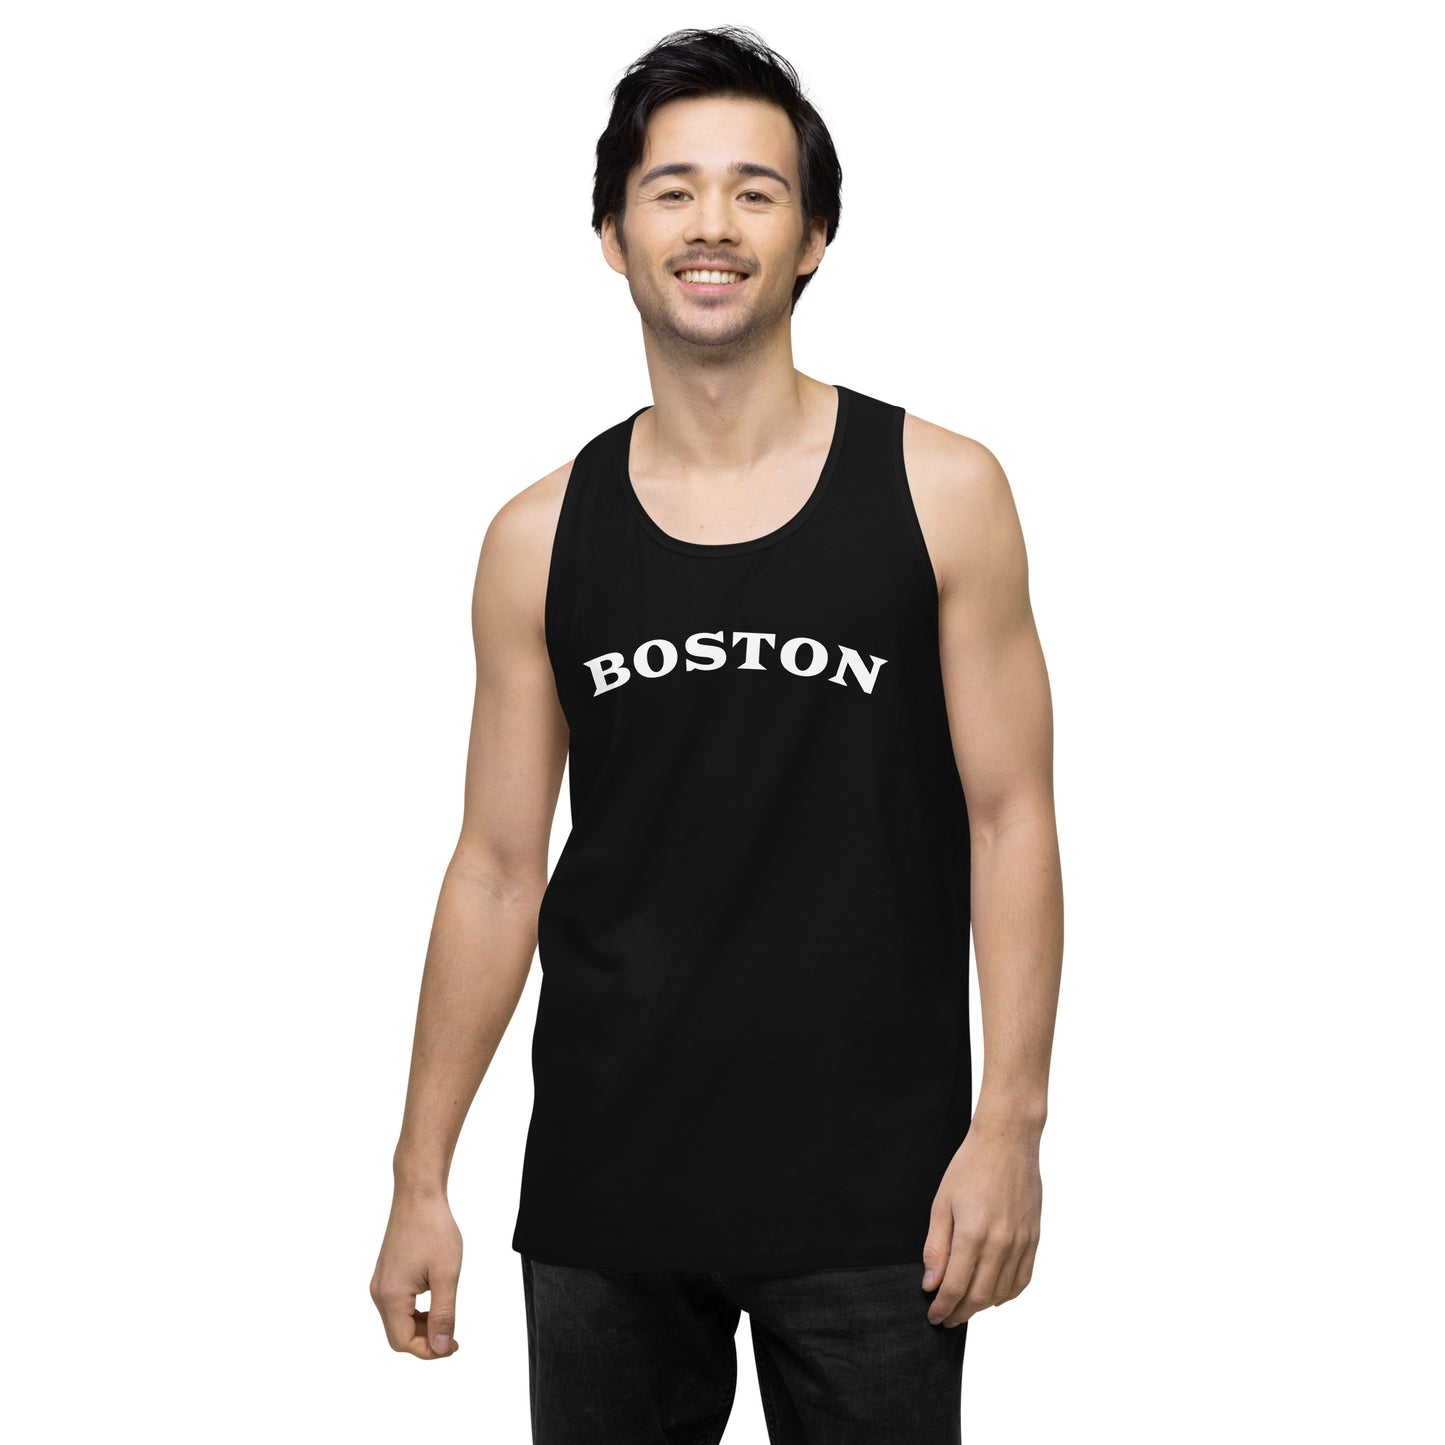 Boston men’s premium tank top